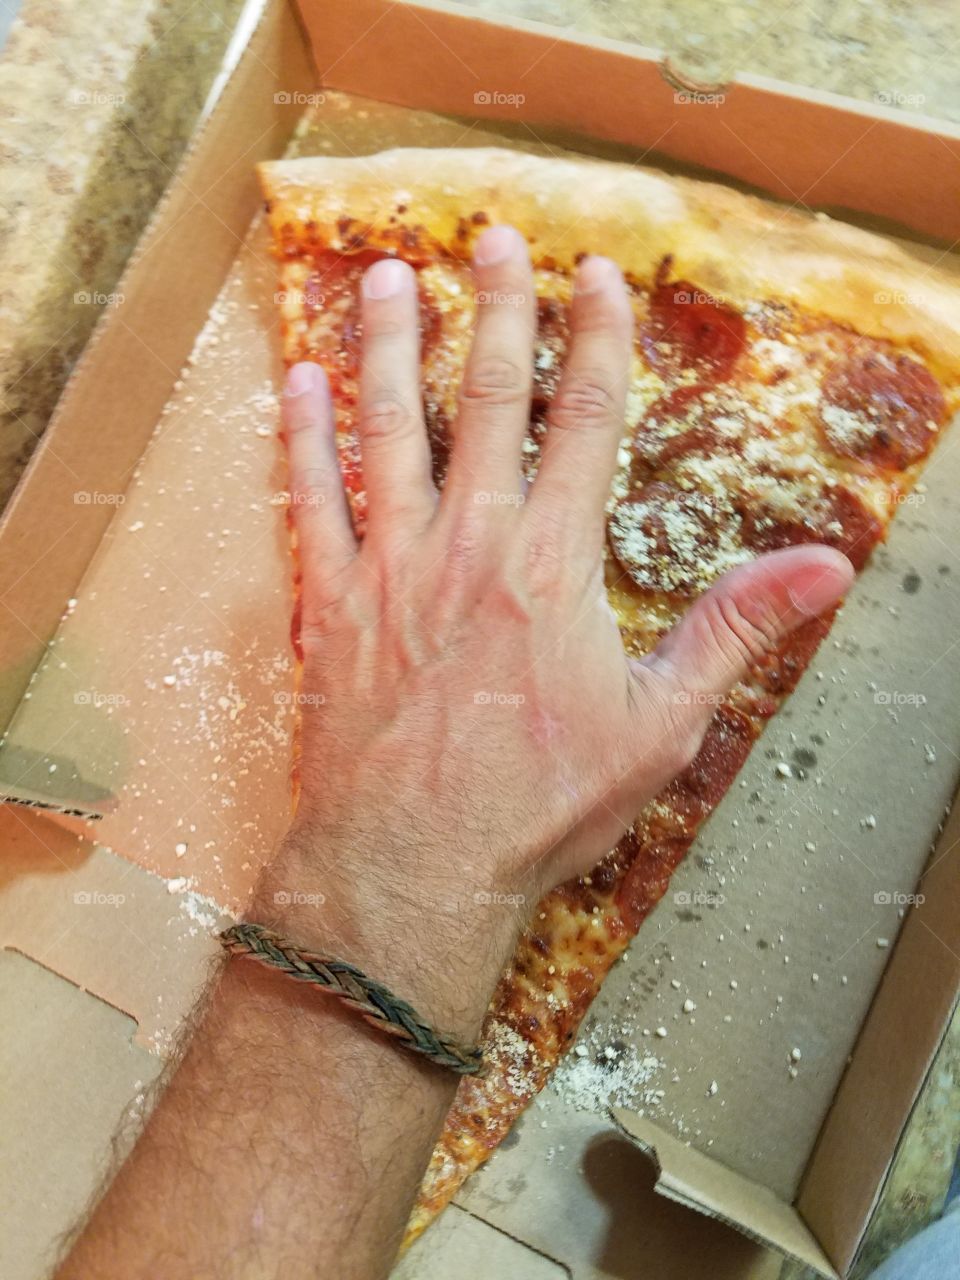 Washington dc jumbo slice of pizza, bigger than my man hands